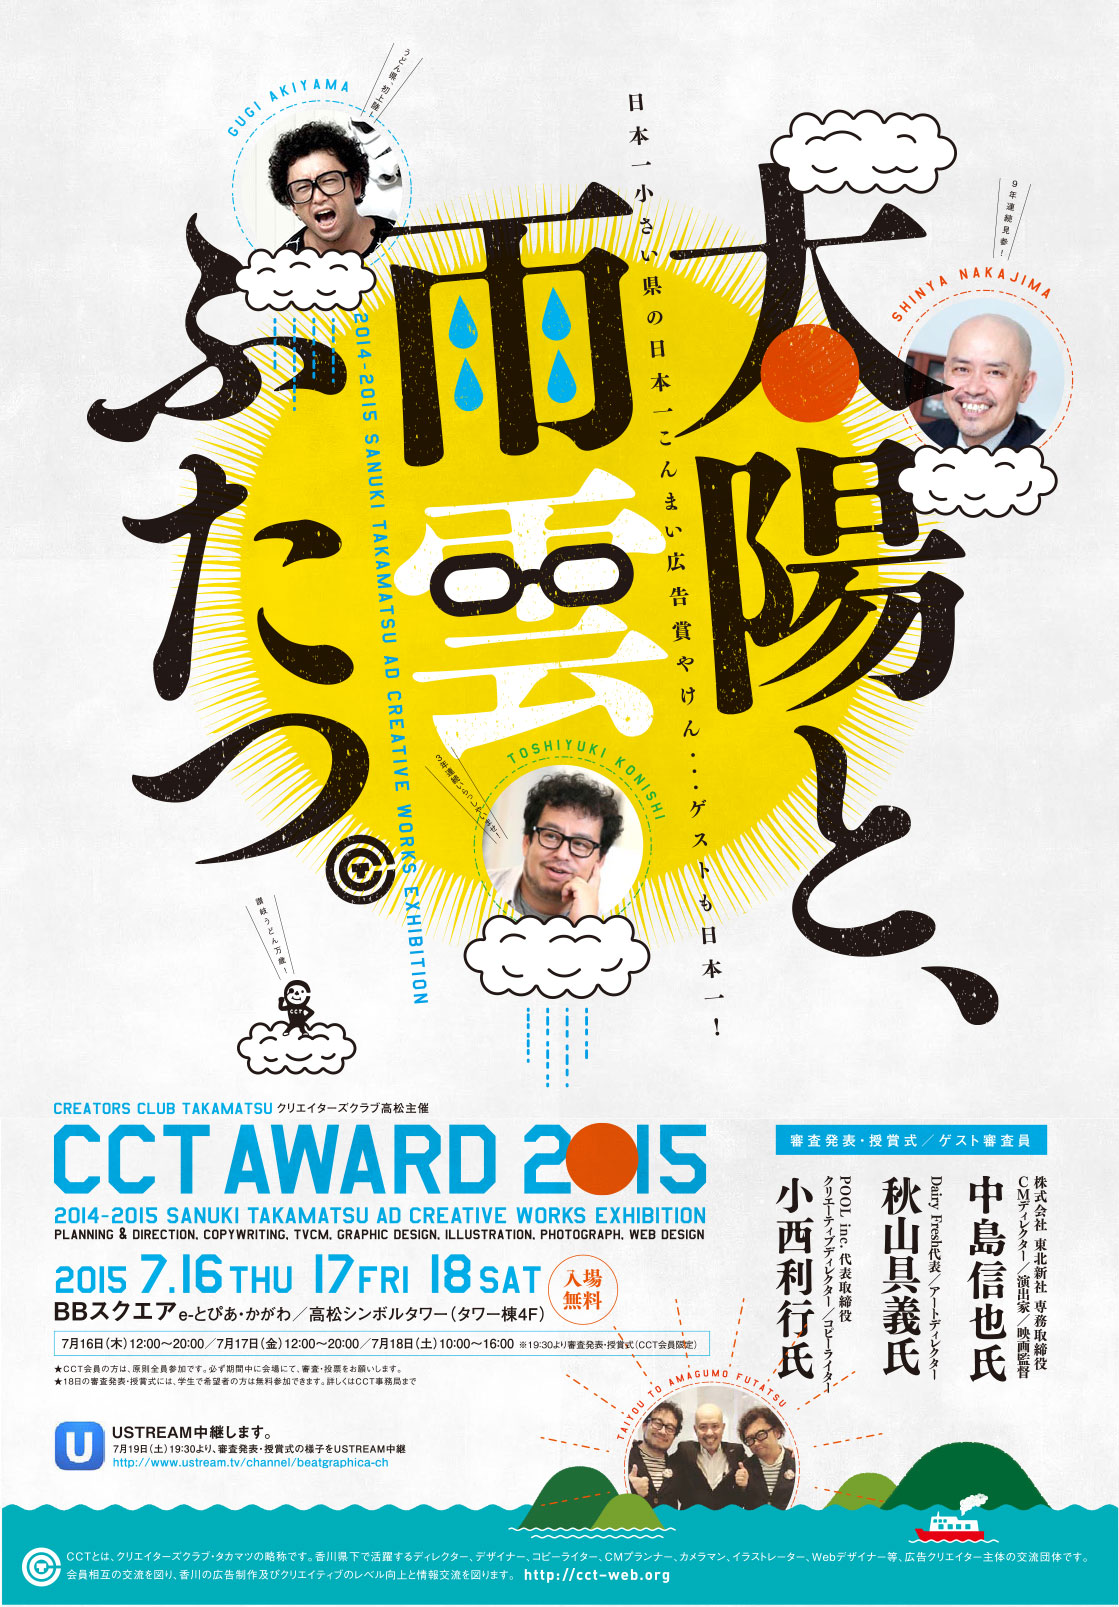 CCT AWARD 2015